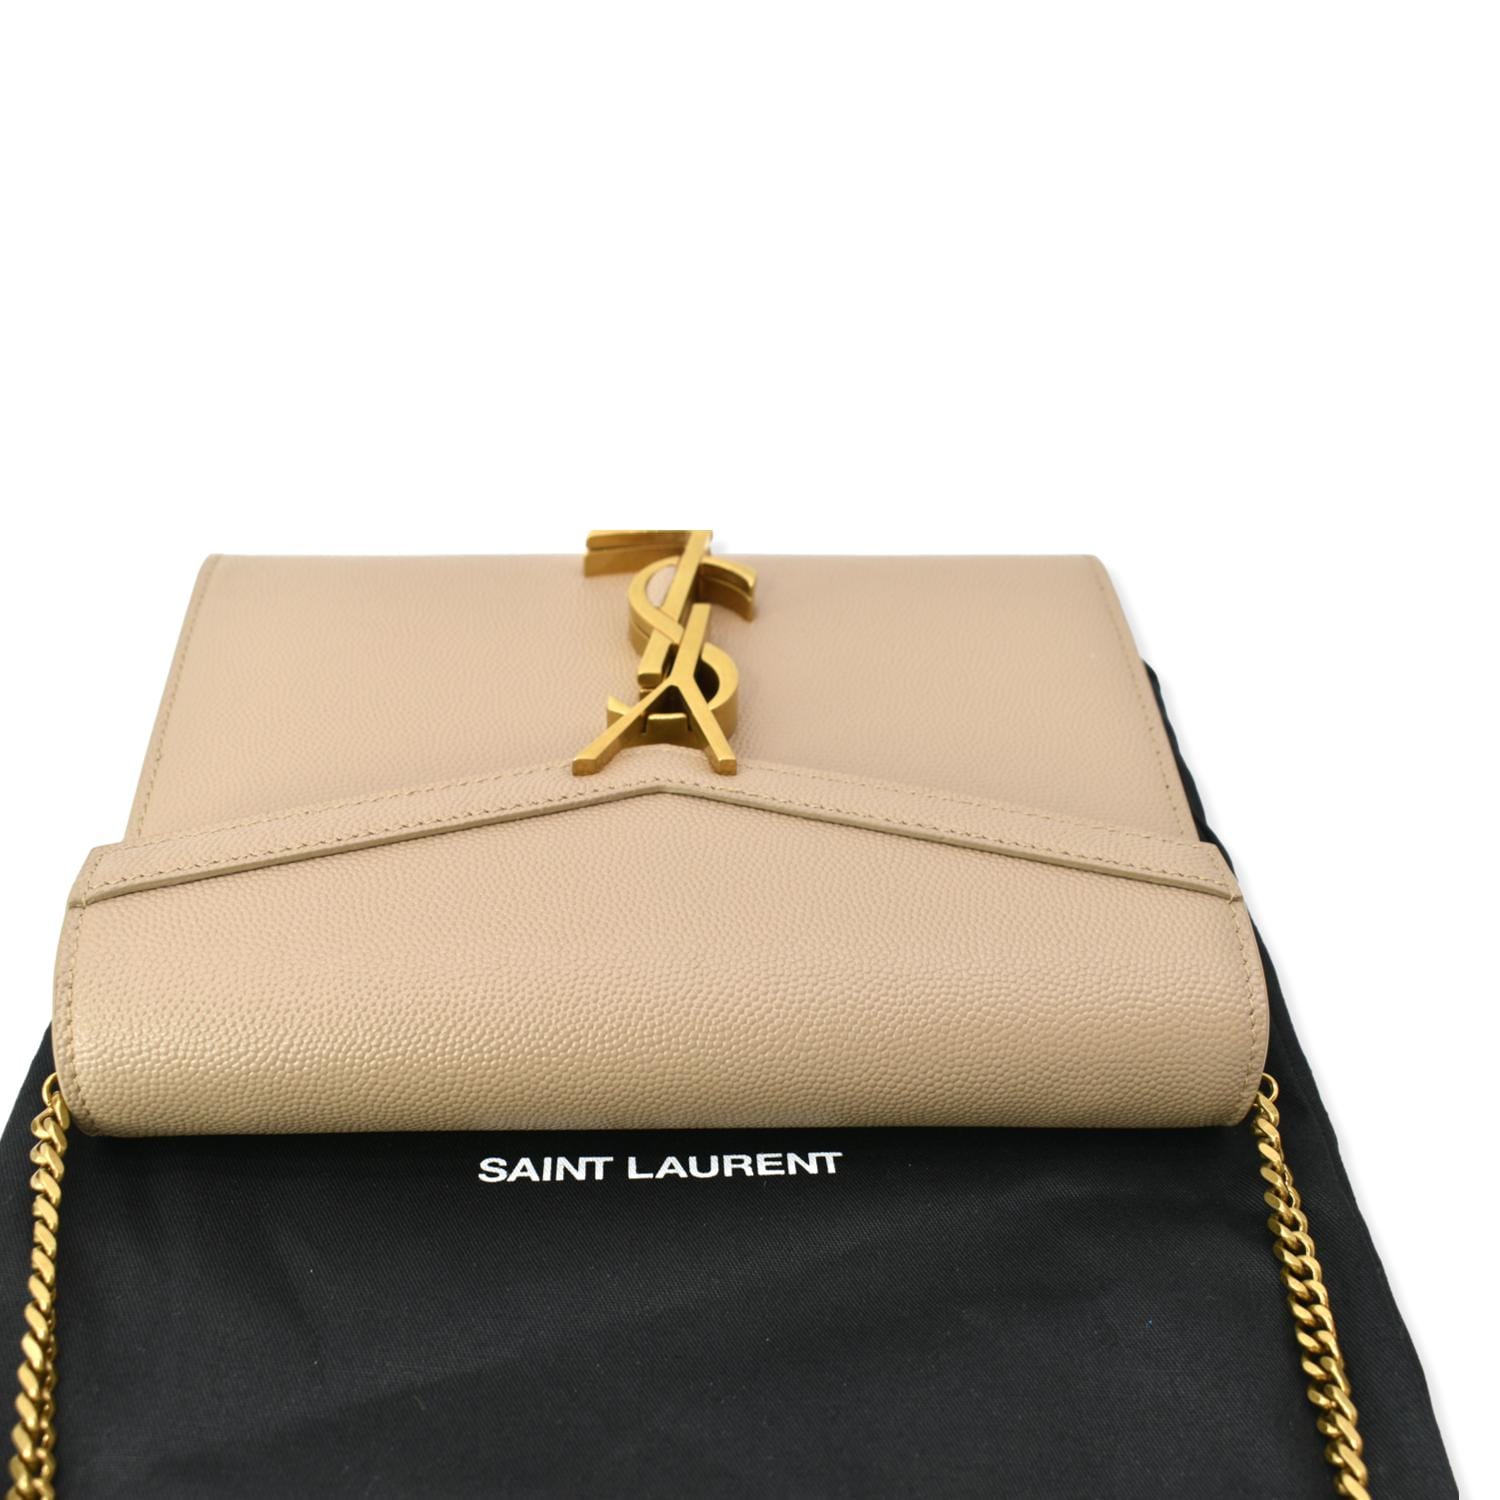 Saint Laurent Mini Bags, YSL Cassandra & Kate